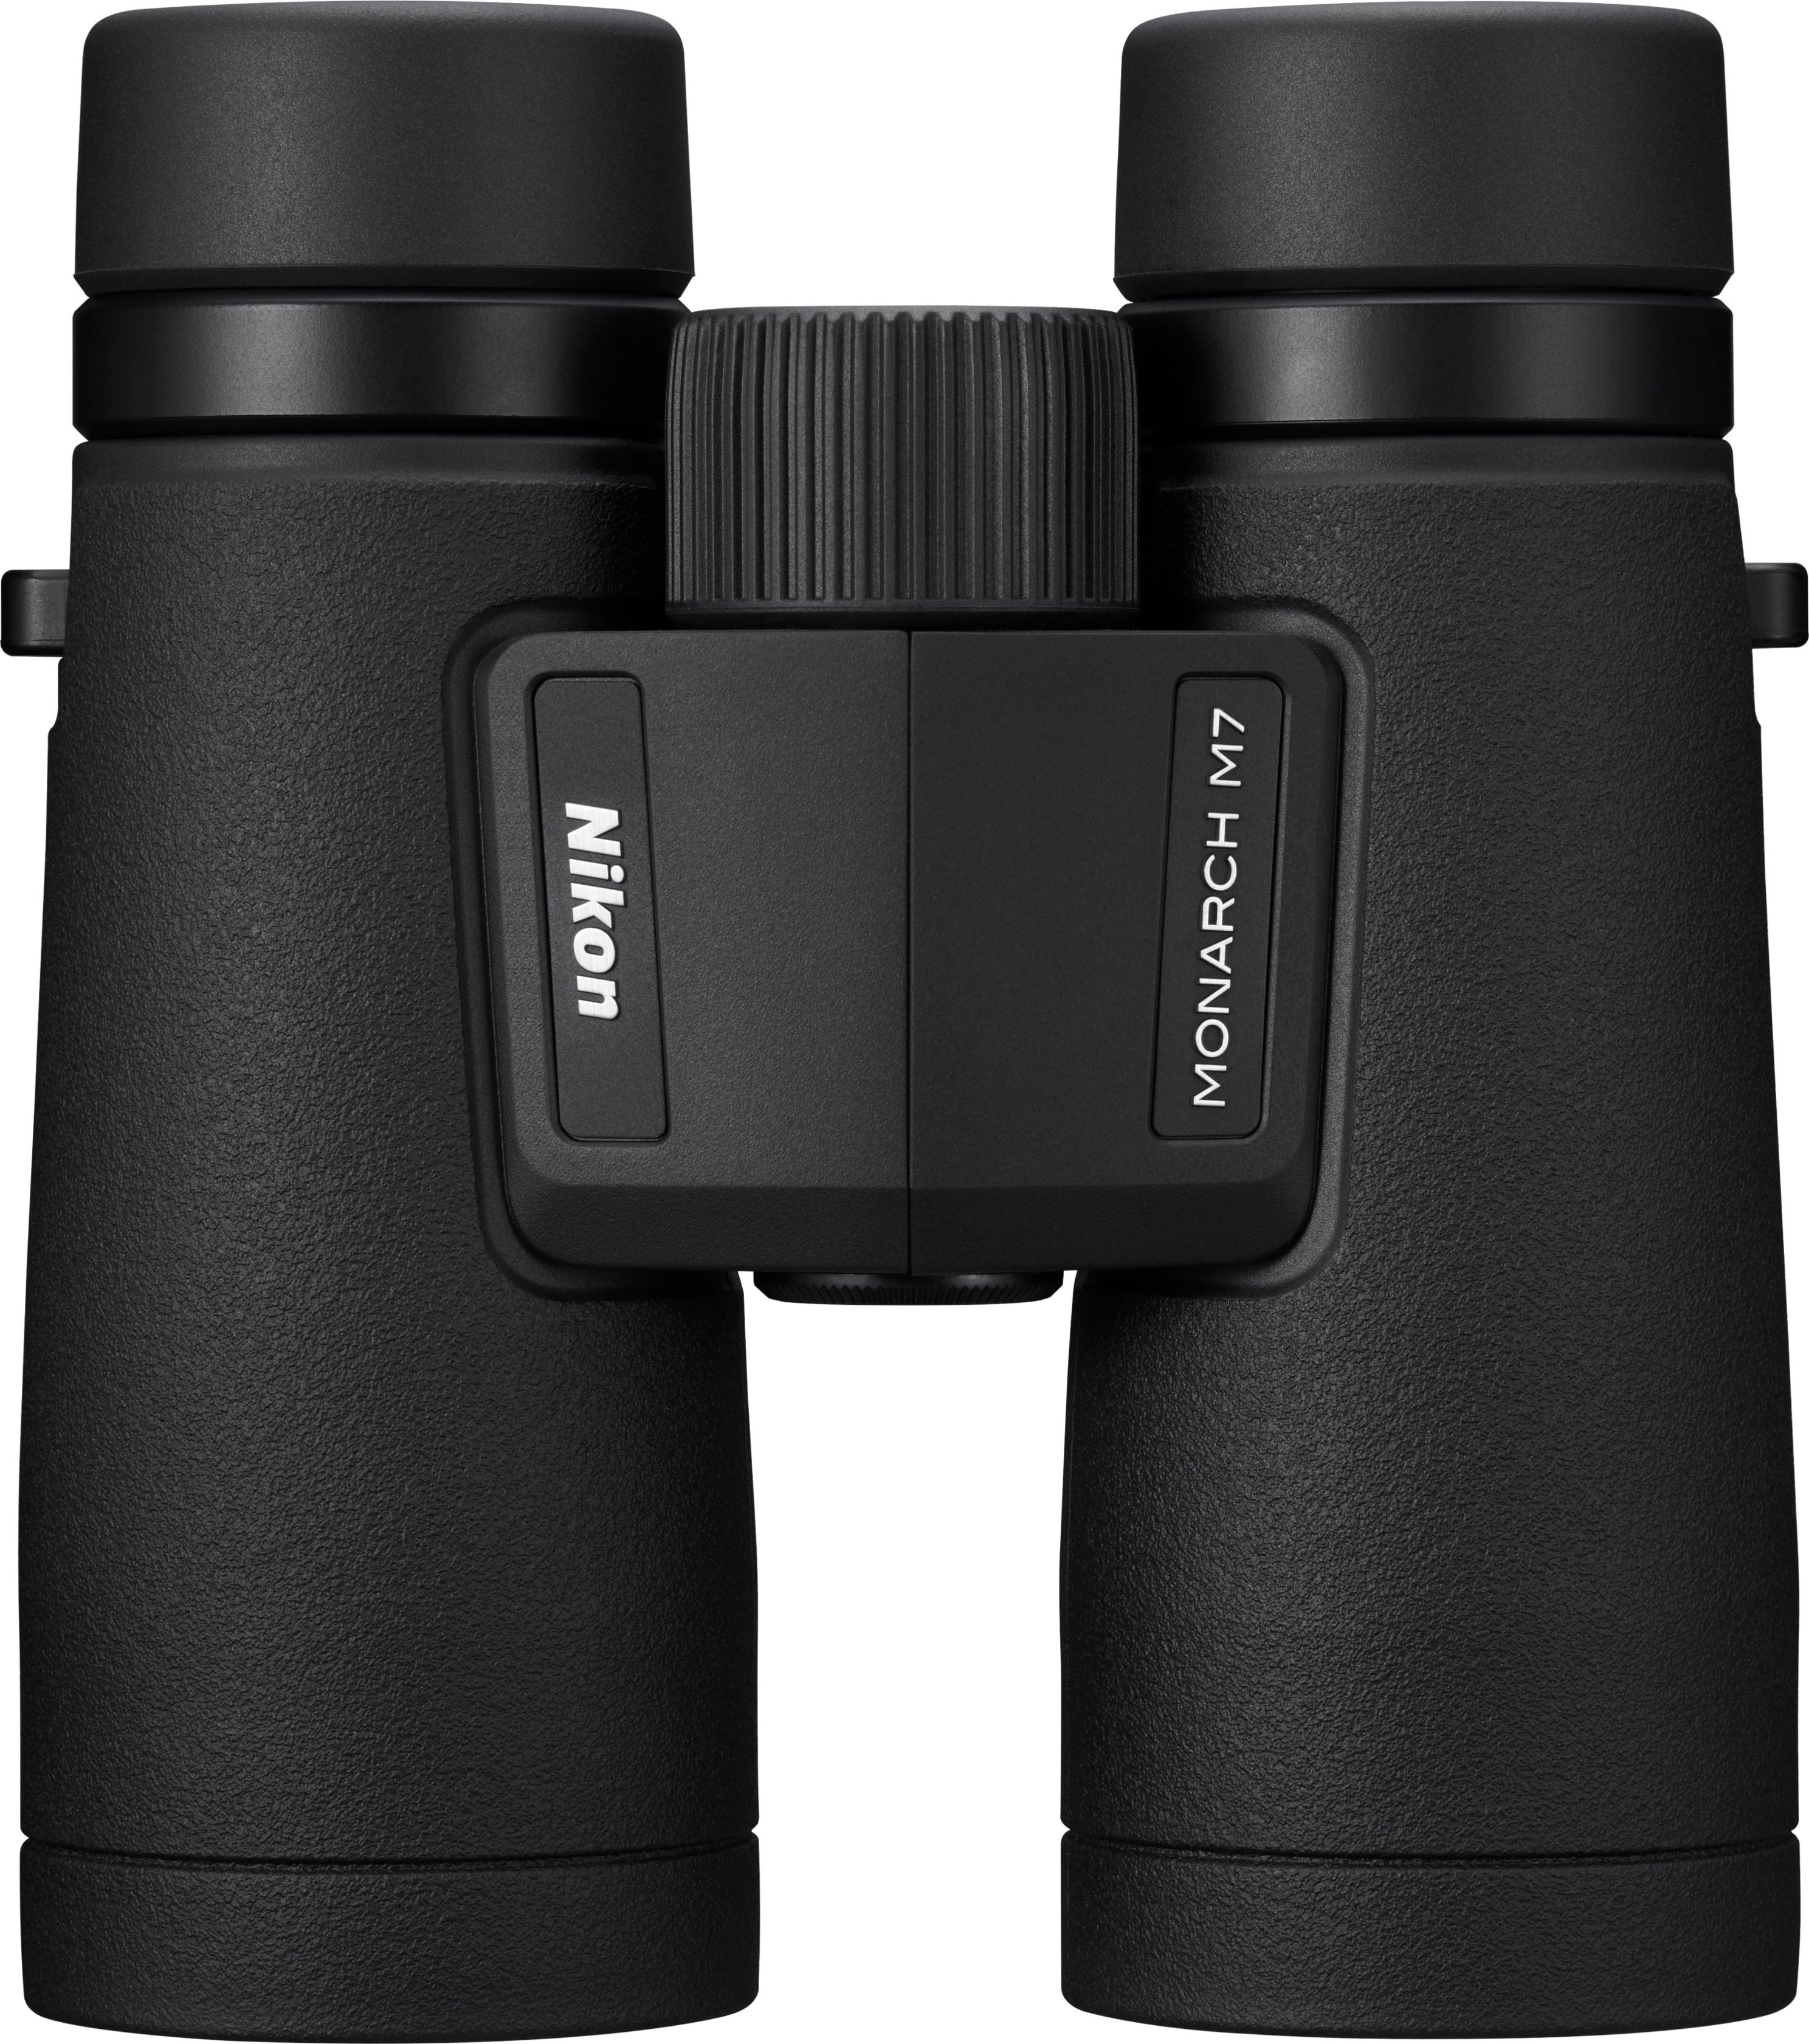 Angle View: Nikon - Monarch M7 8X42 Binocular